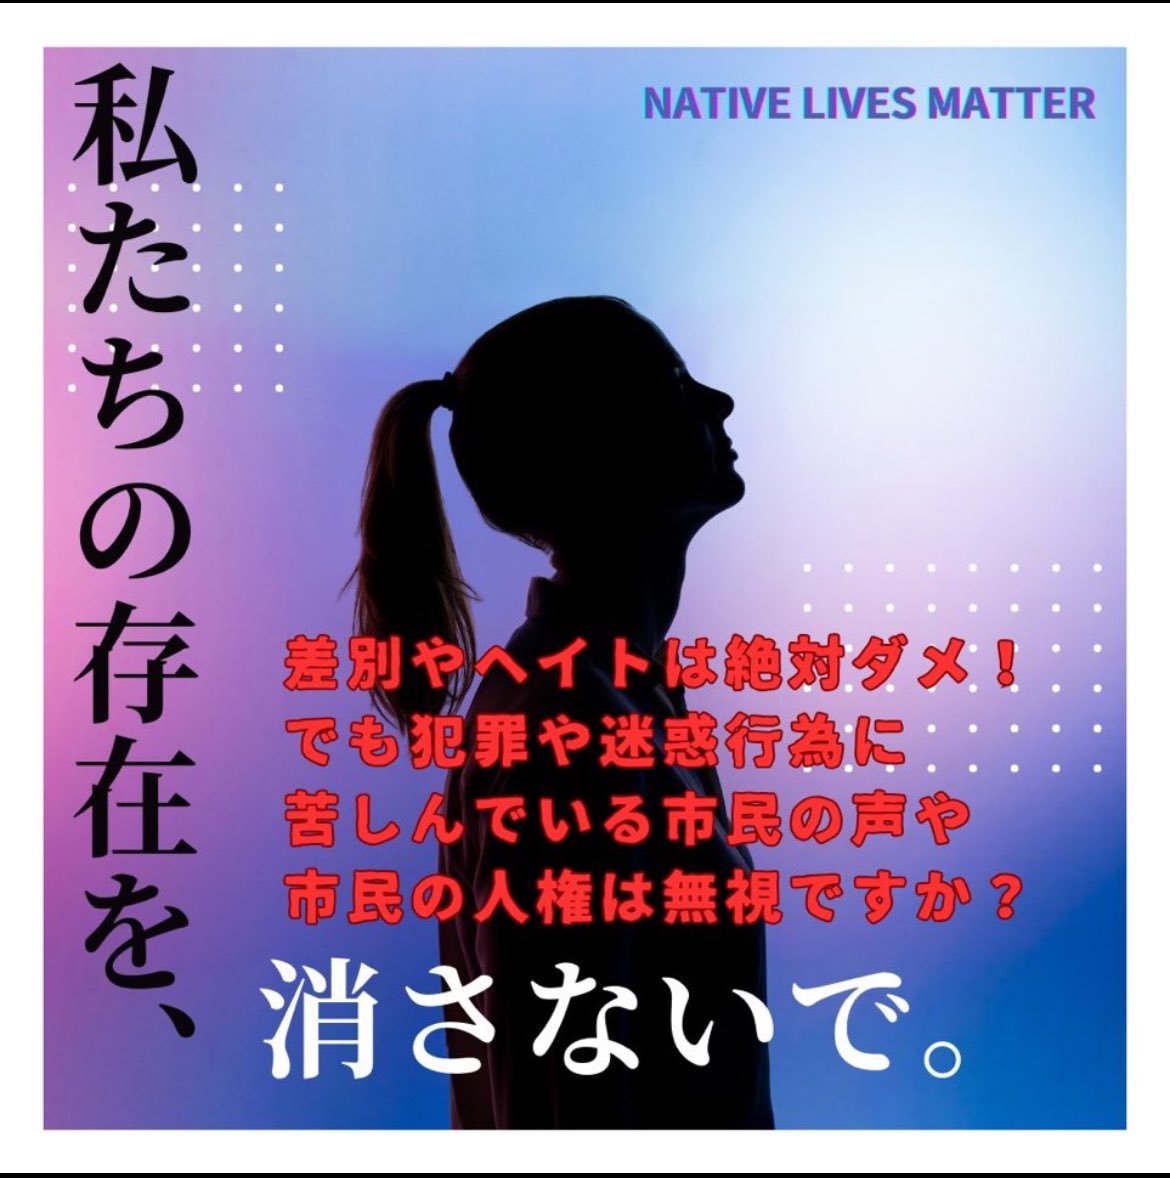 #JapaneseLivesMattar
#NativeLivesMatter 
#川口市に平和を
#蕨市に平和を
#川口市民の想い
#蕨市民の想い

#ツイデモ リレーをお願いします🙏